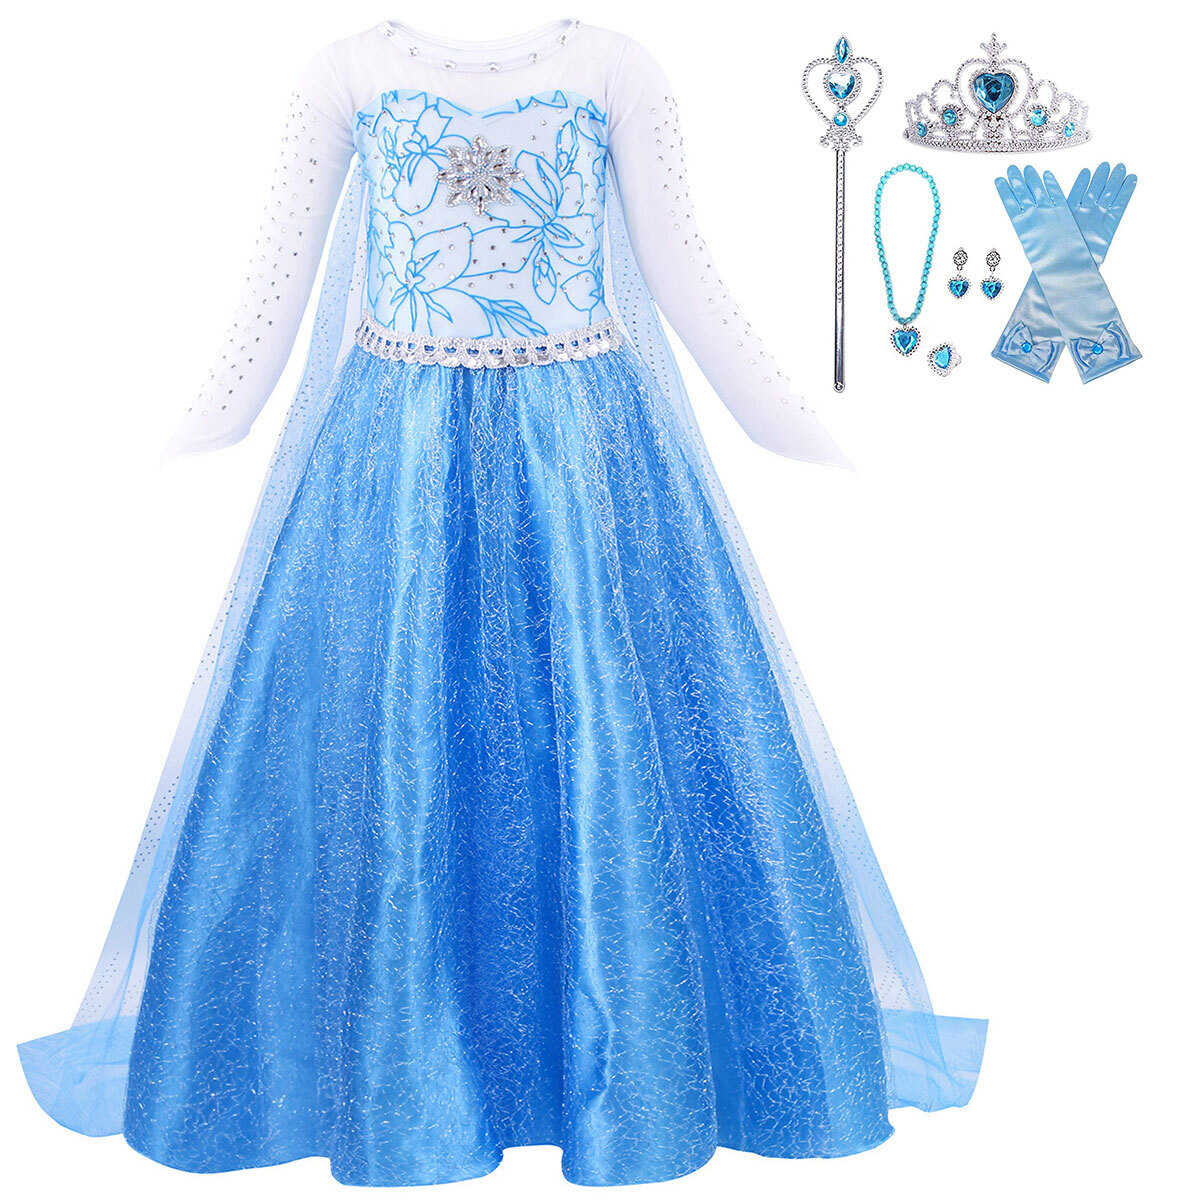 Girls Elsa Costume Princess Dress Birthday Christmas Halloween Party Dress up - image 1 of 8